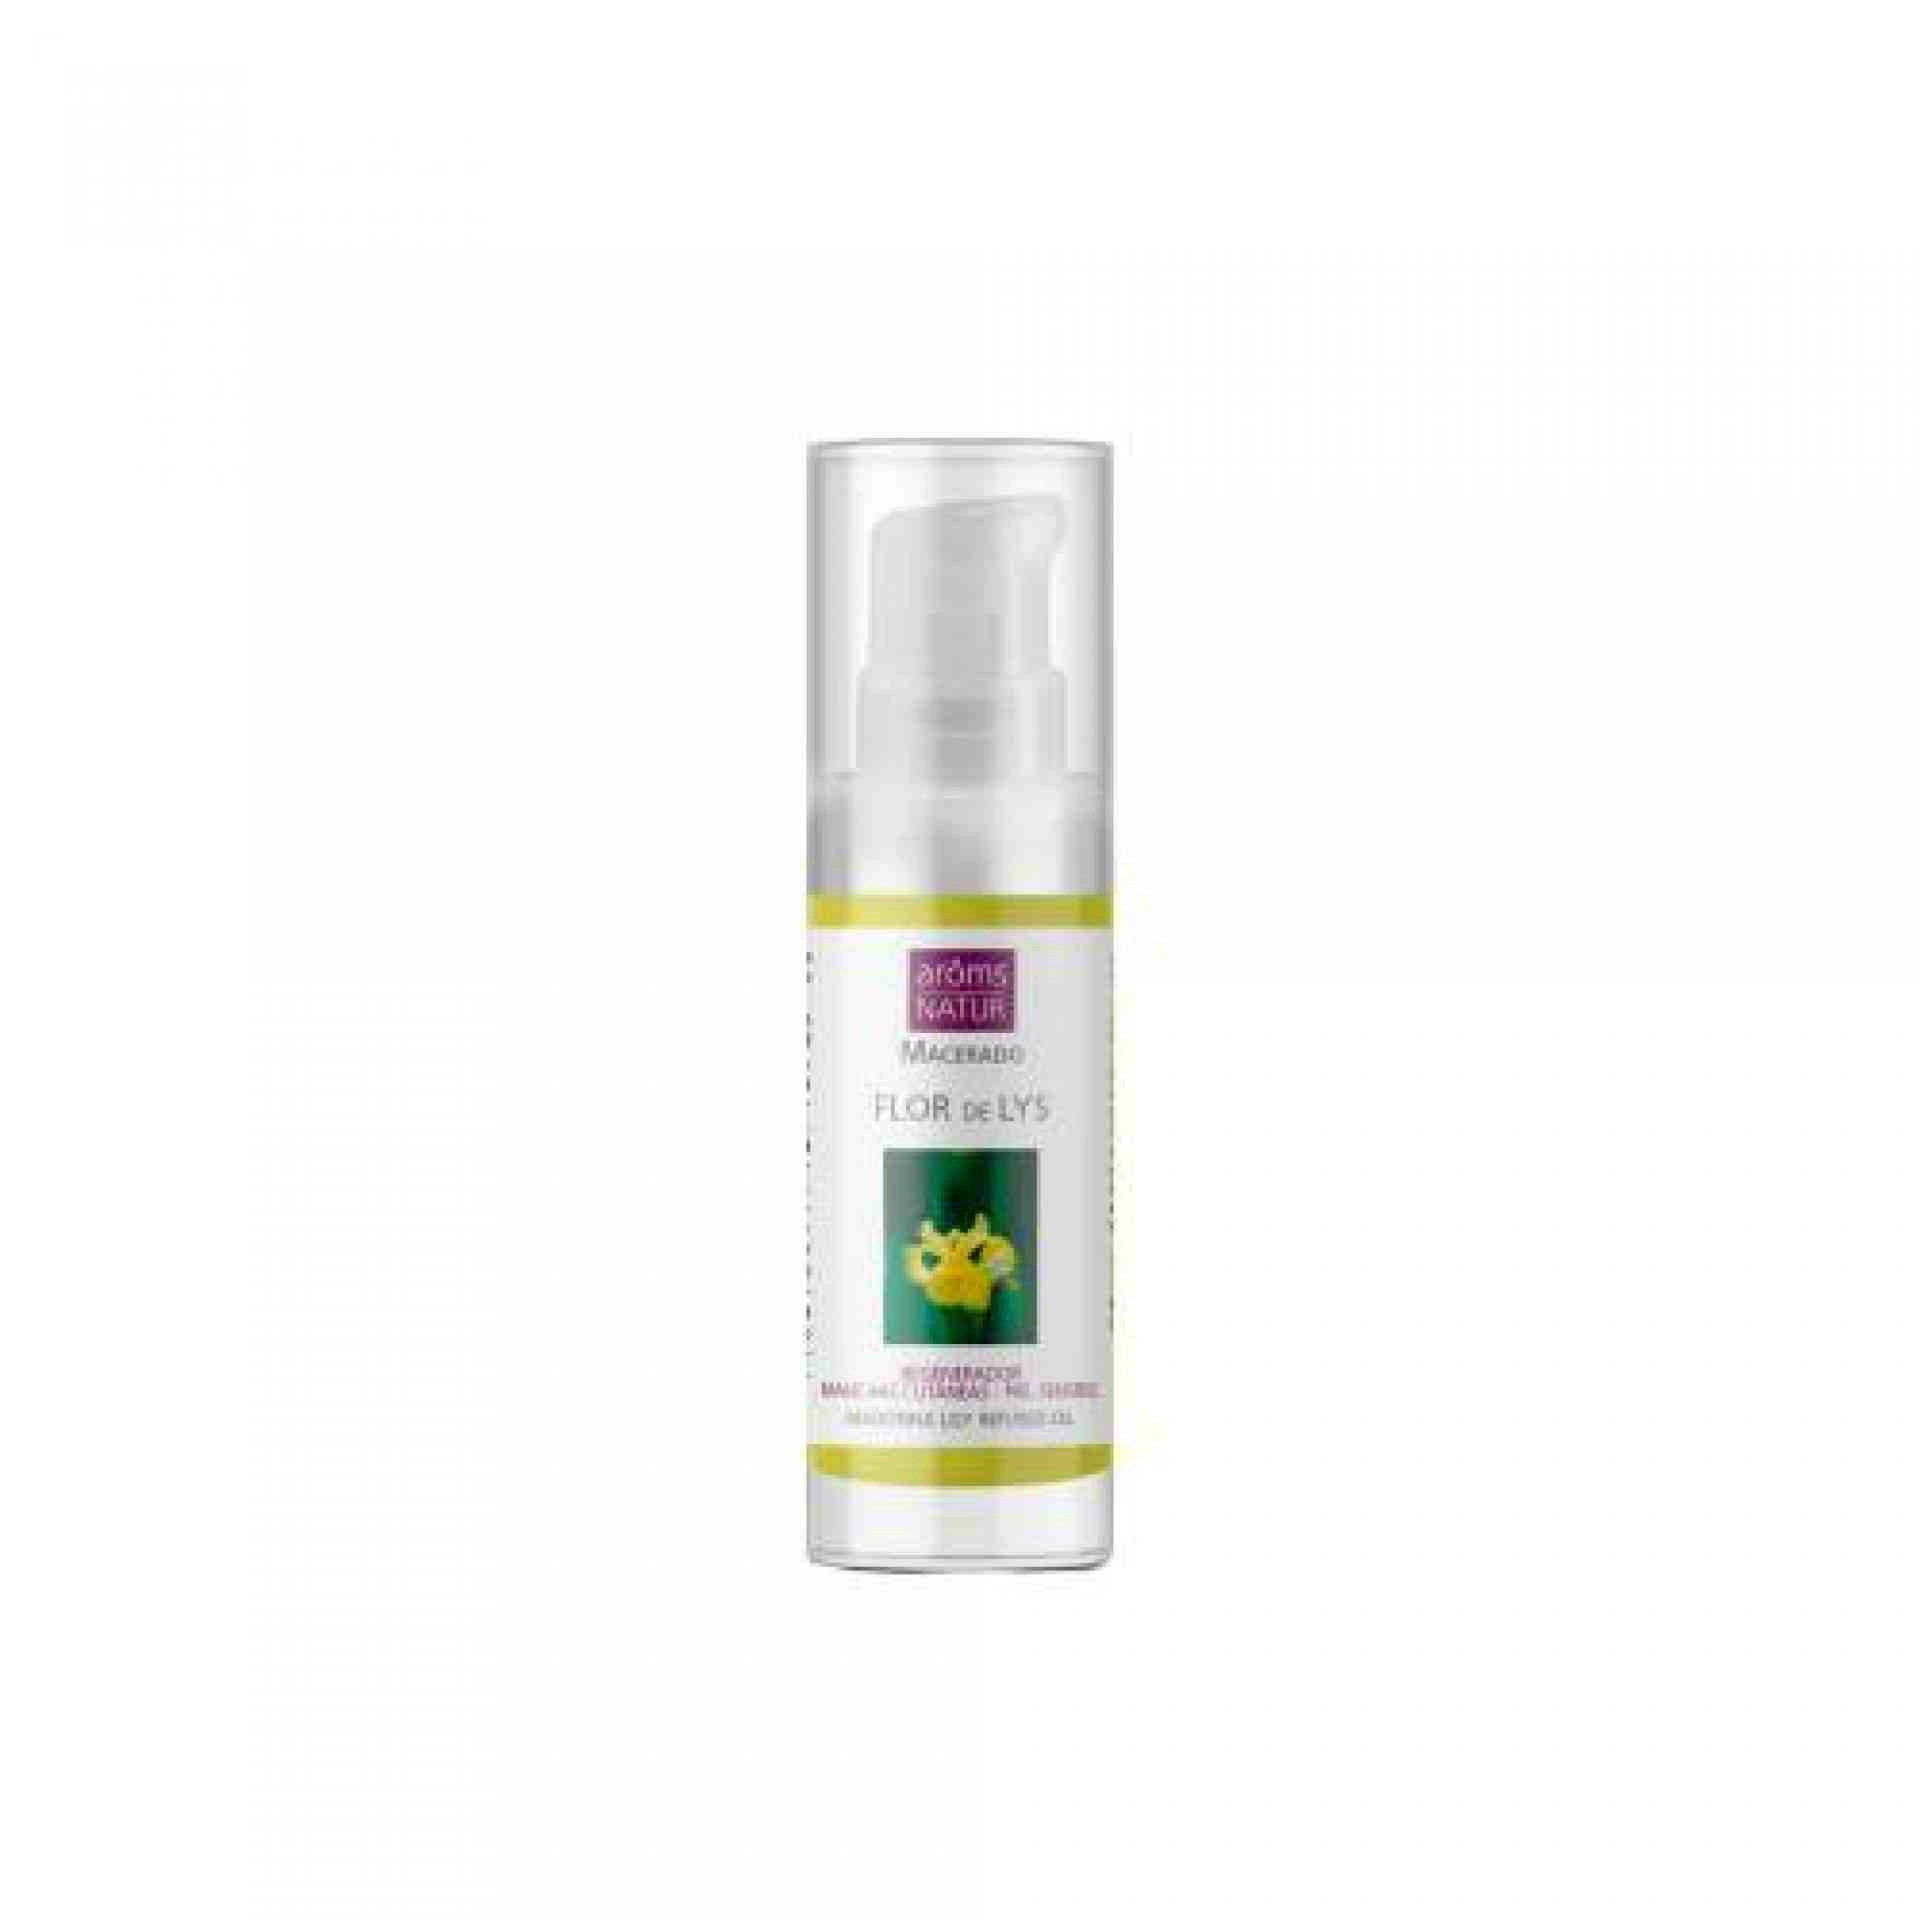 Extracto lipídico Flor de Lys | Aceite vegetal despigmentante 30ml - Arôms Natur ®